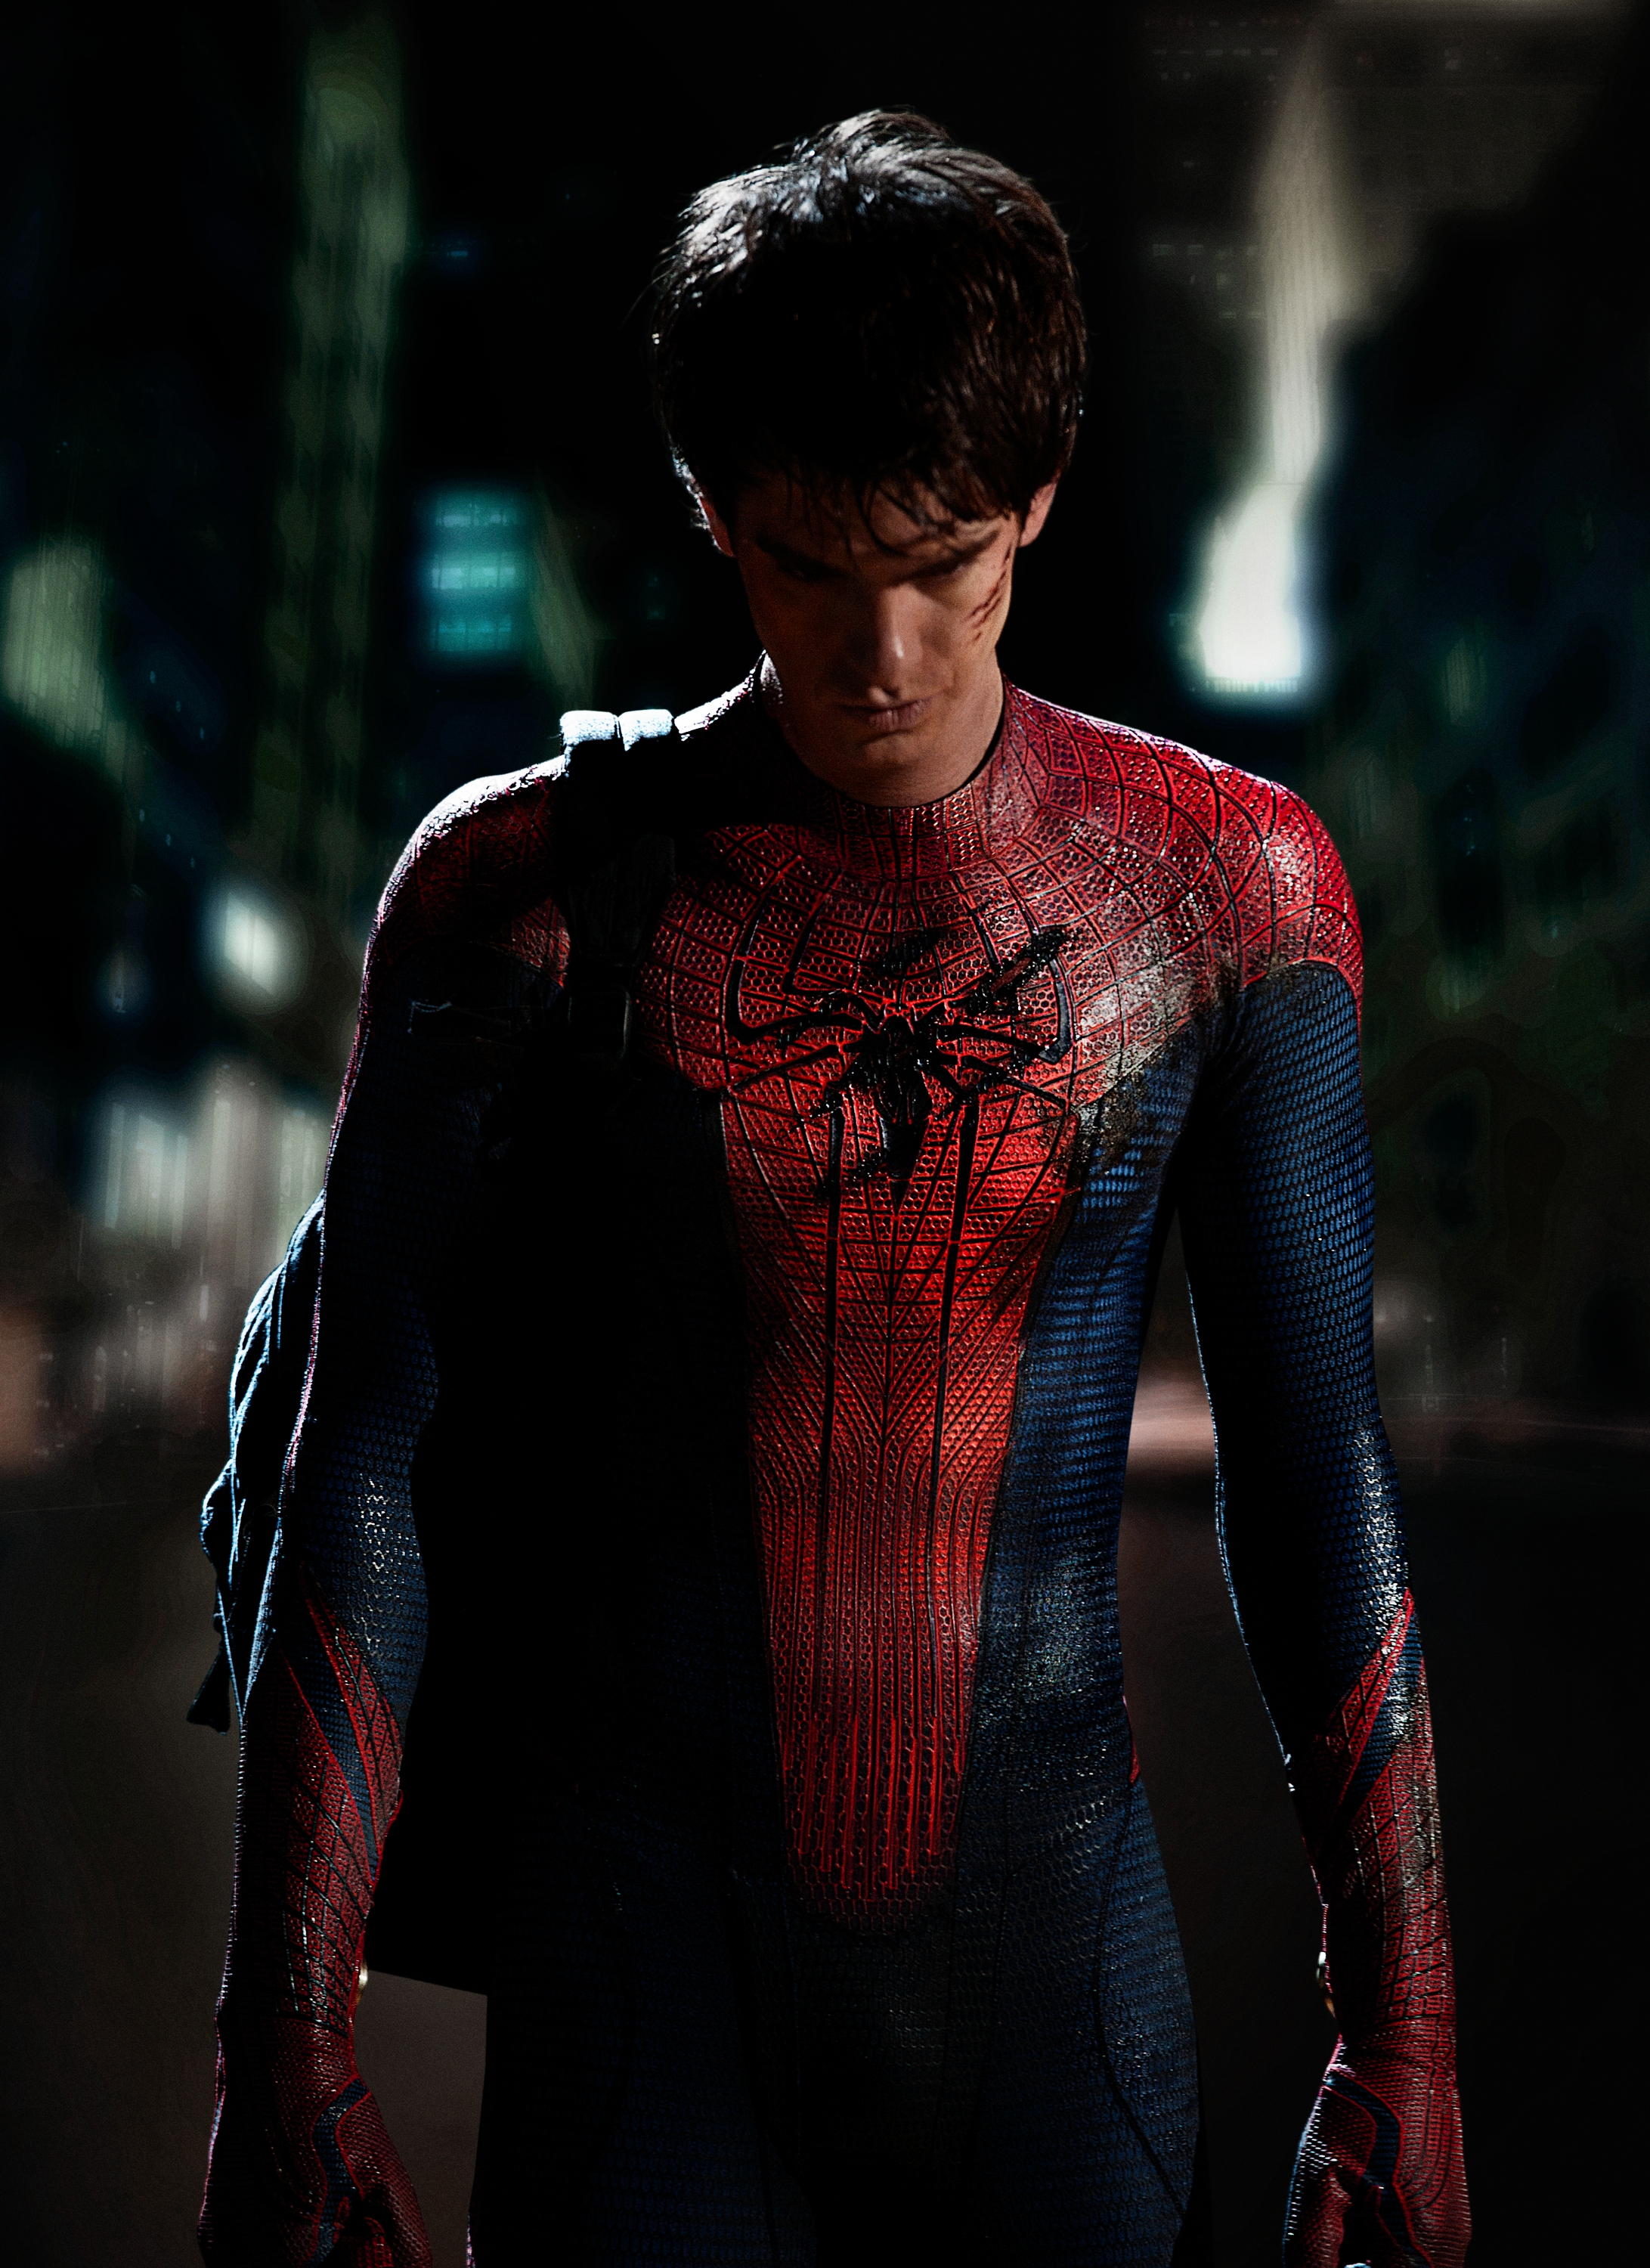 http://blog.films.ie/images/Spider-man_%20Andrew%20Garfield.JPG